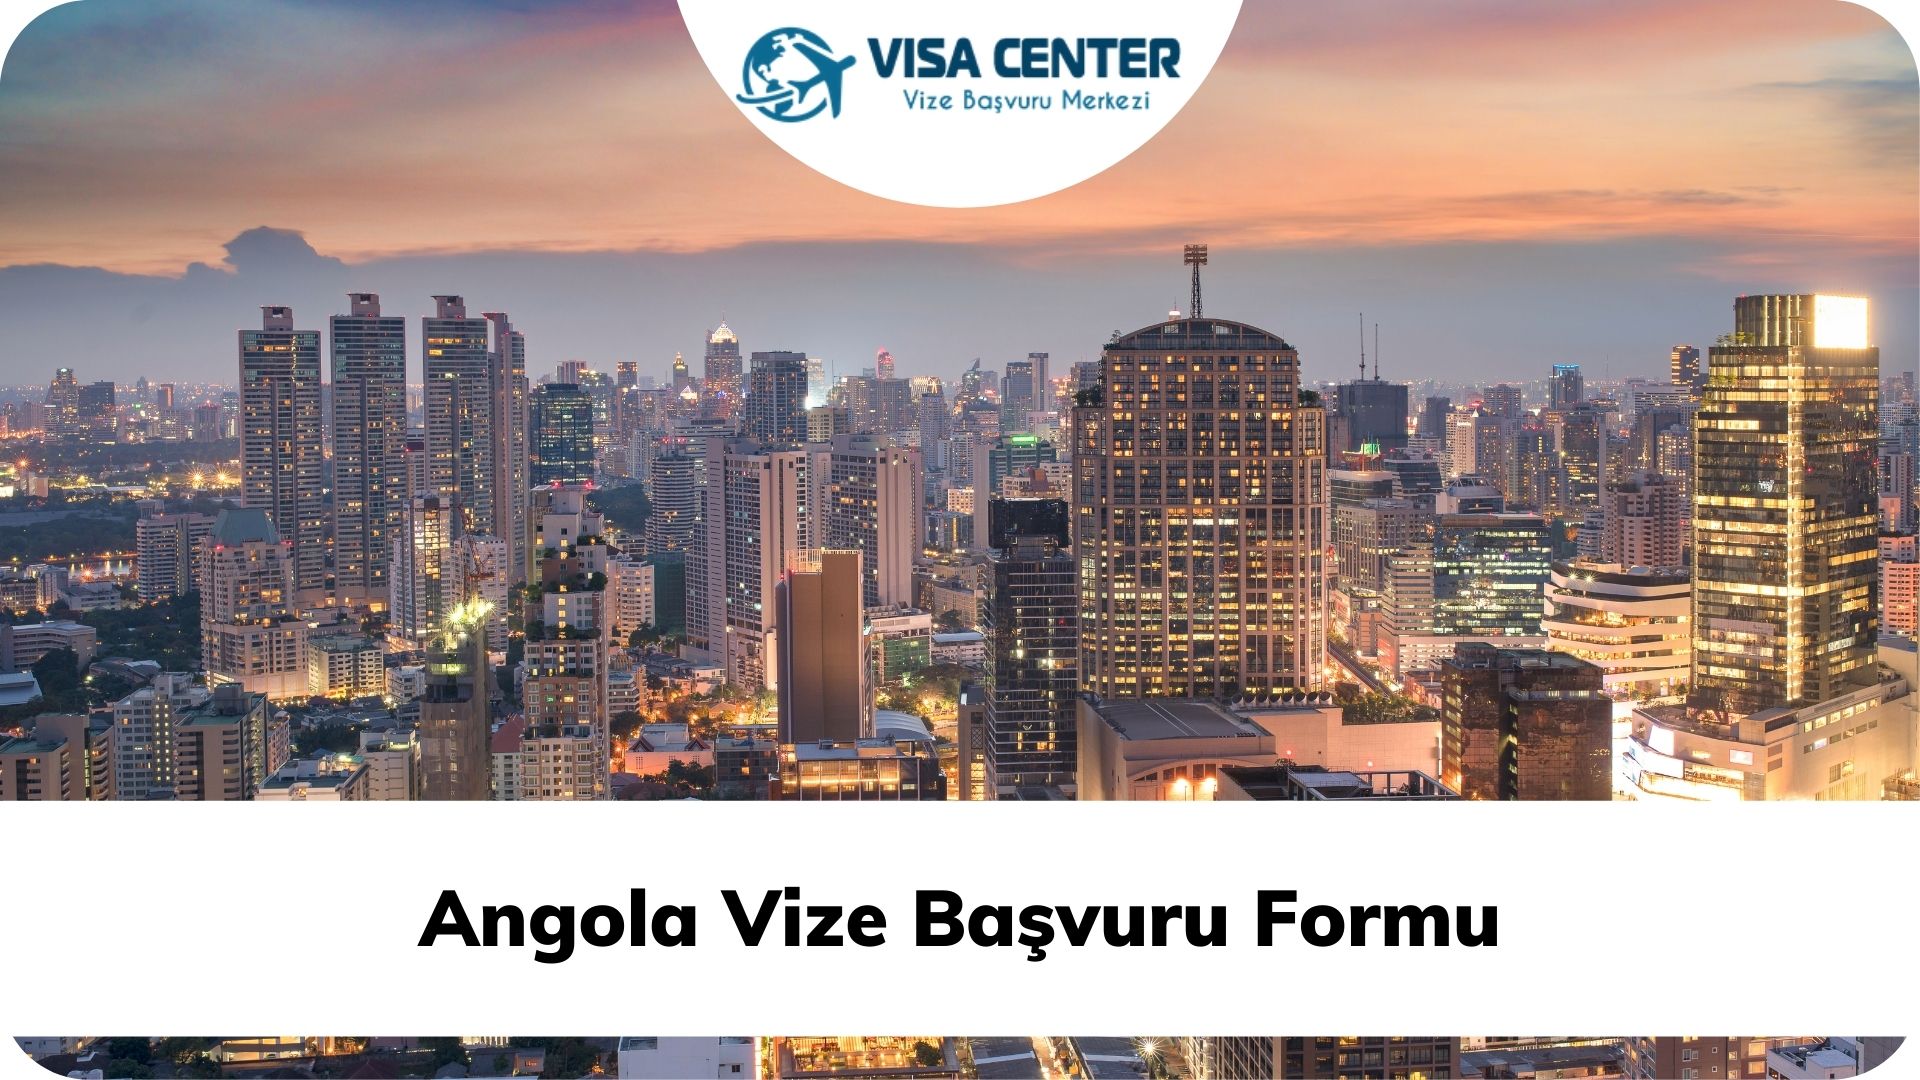 Angola Vize Başvuru Formu